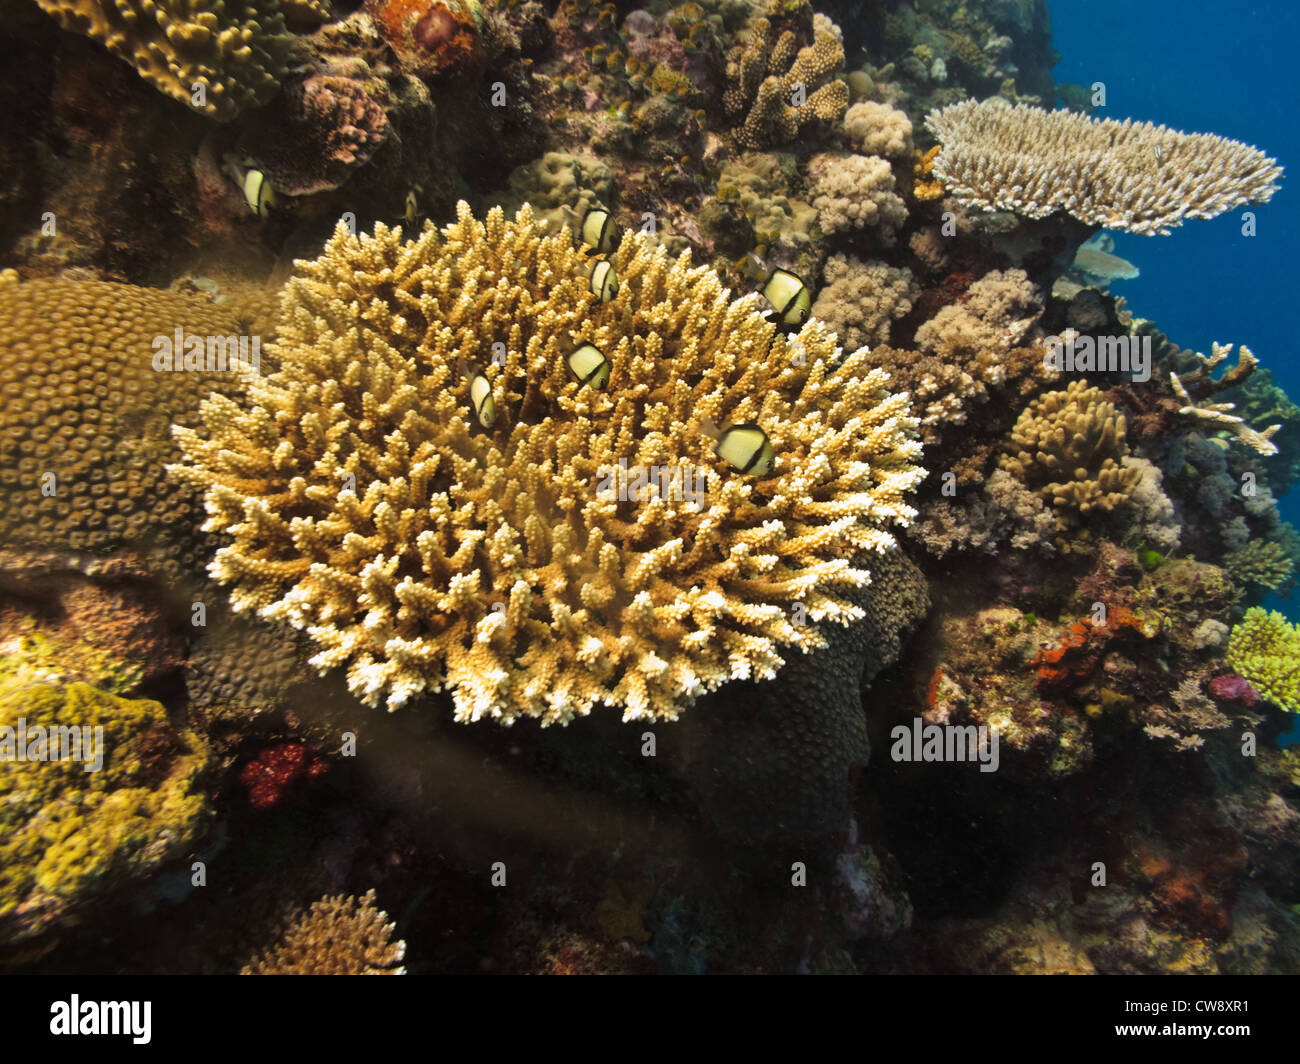 Underwater view of Stony coral colonies Anthoza Hexacorallia Scleractinia in Great Barrier Reef Marine Park Australia Stock Photo